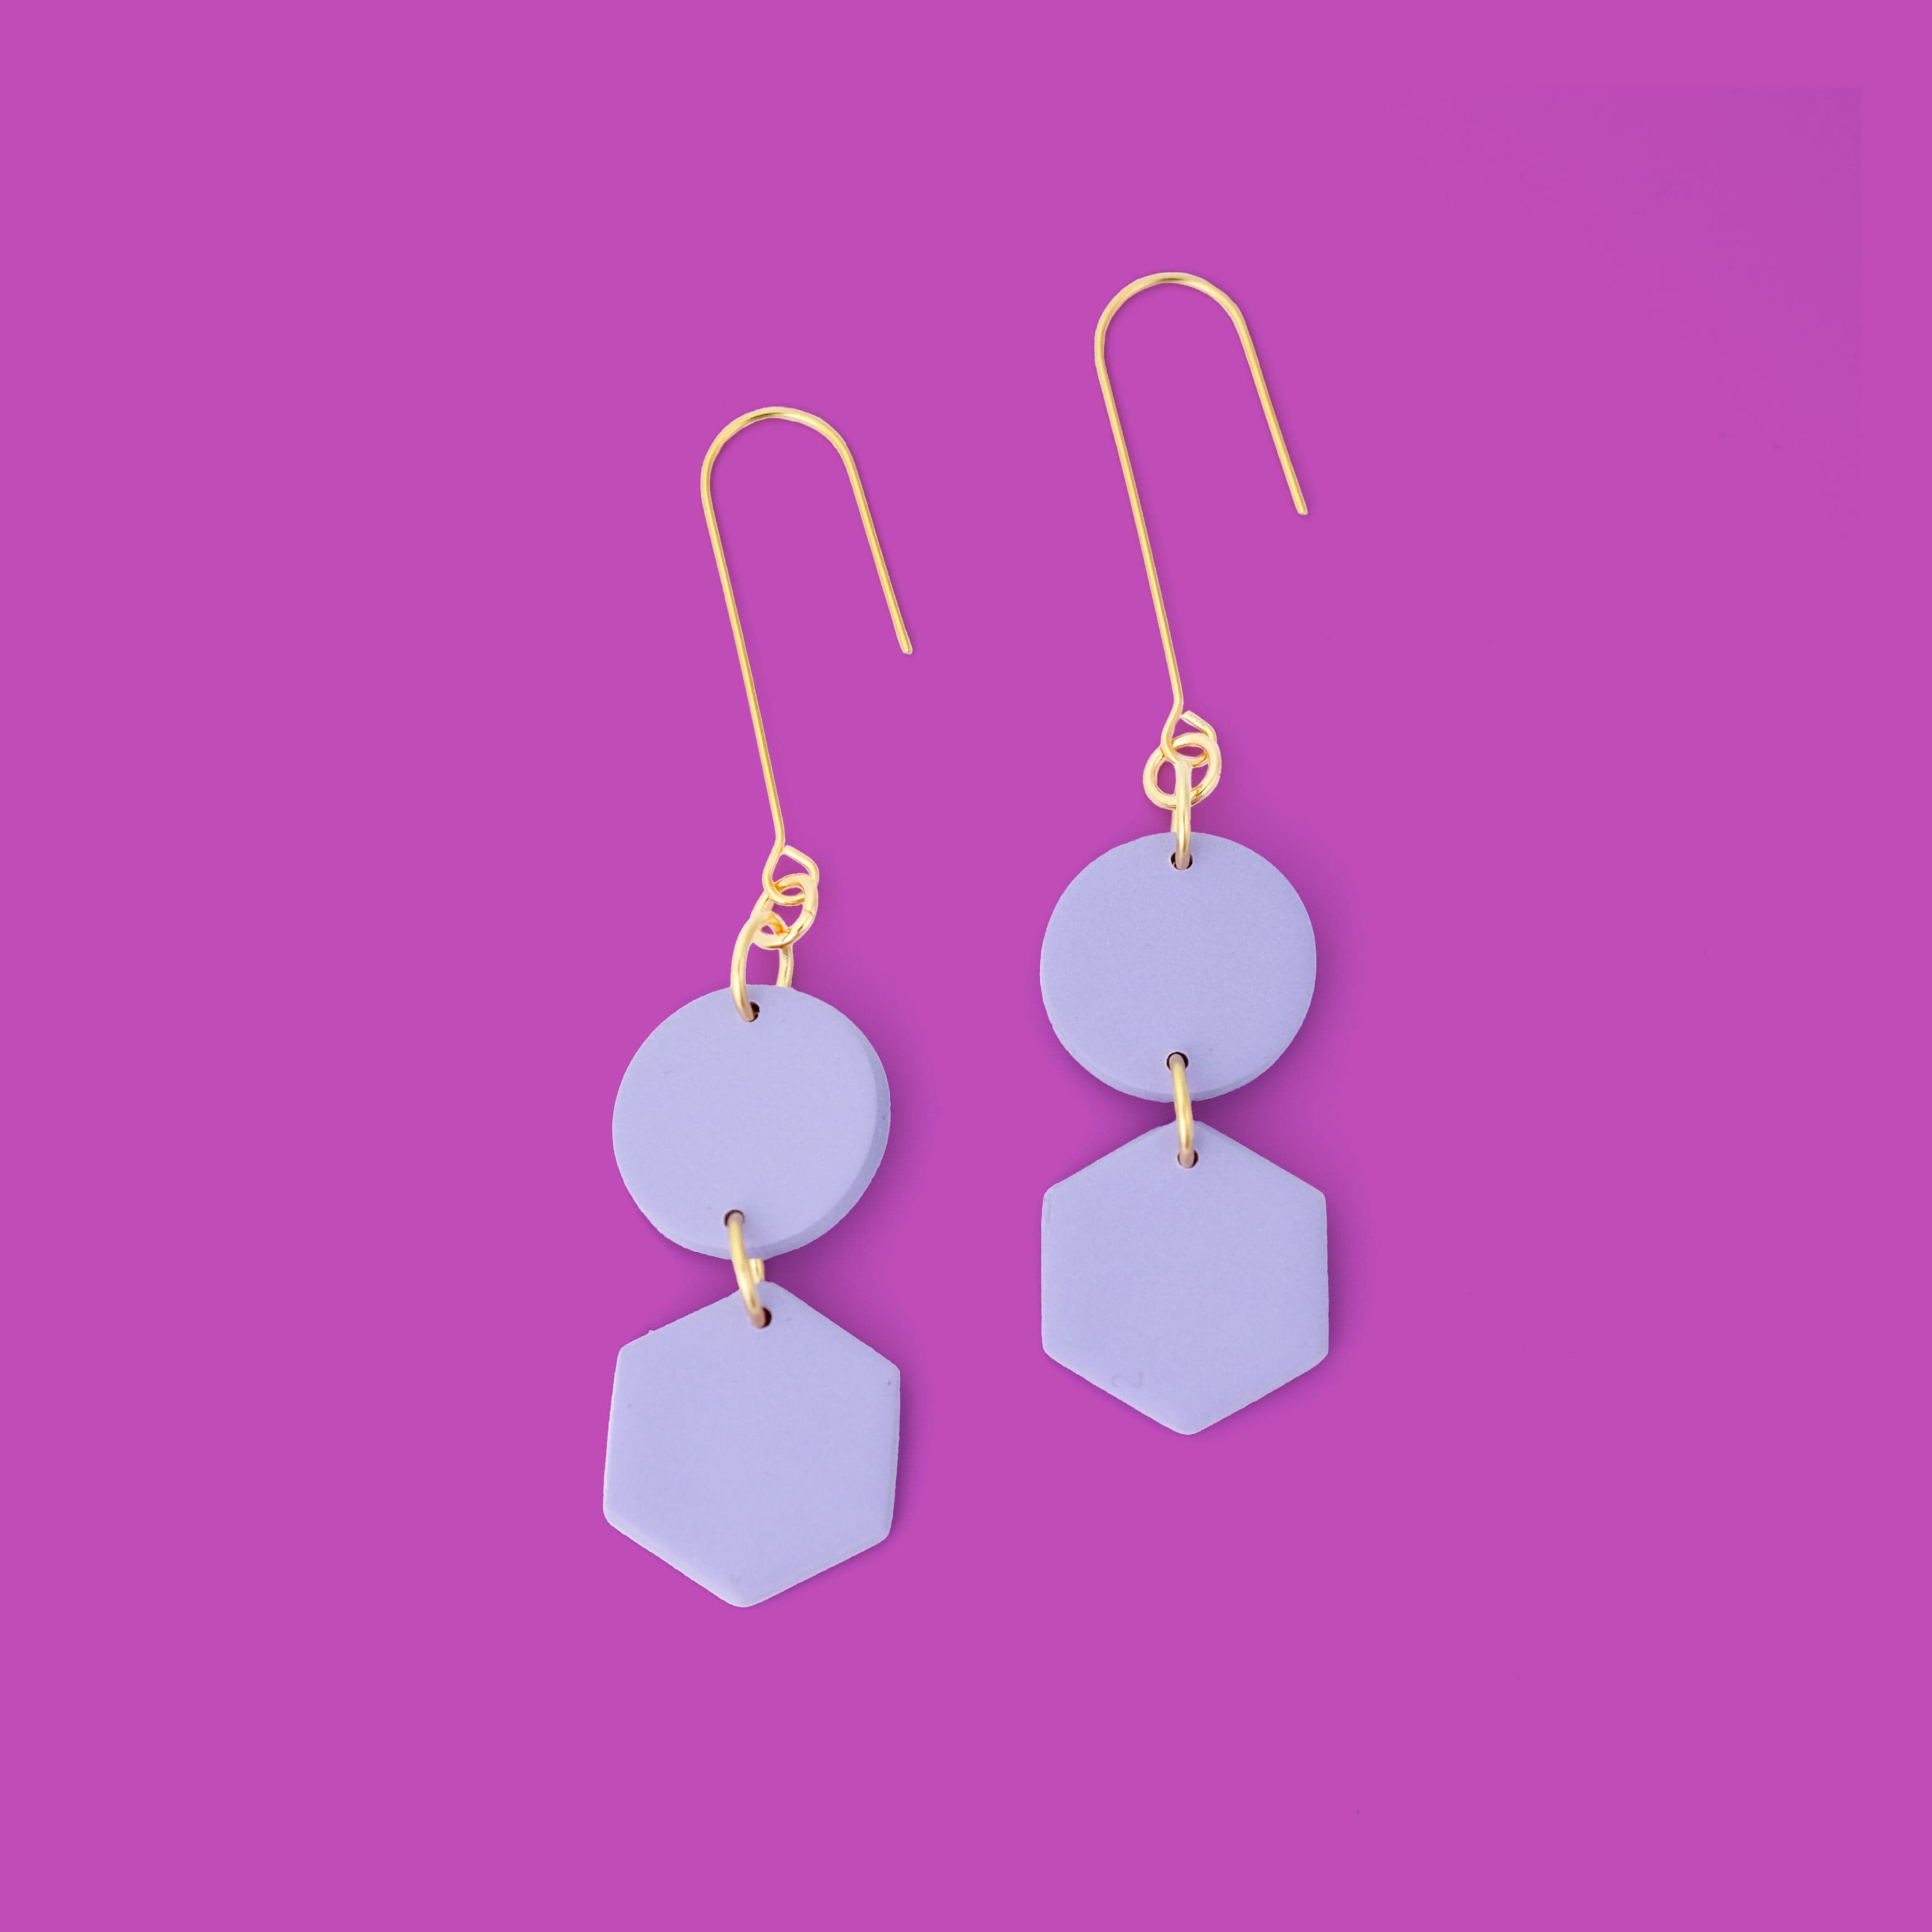 Elegant, elongated and lightweight Belle Dangles geometric dangly earrings in lavender #color_lavender